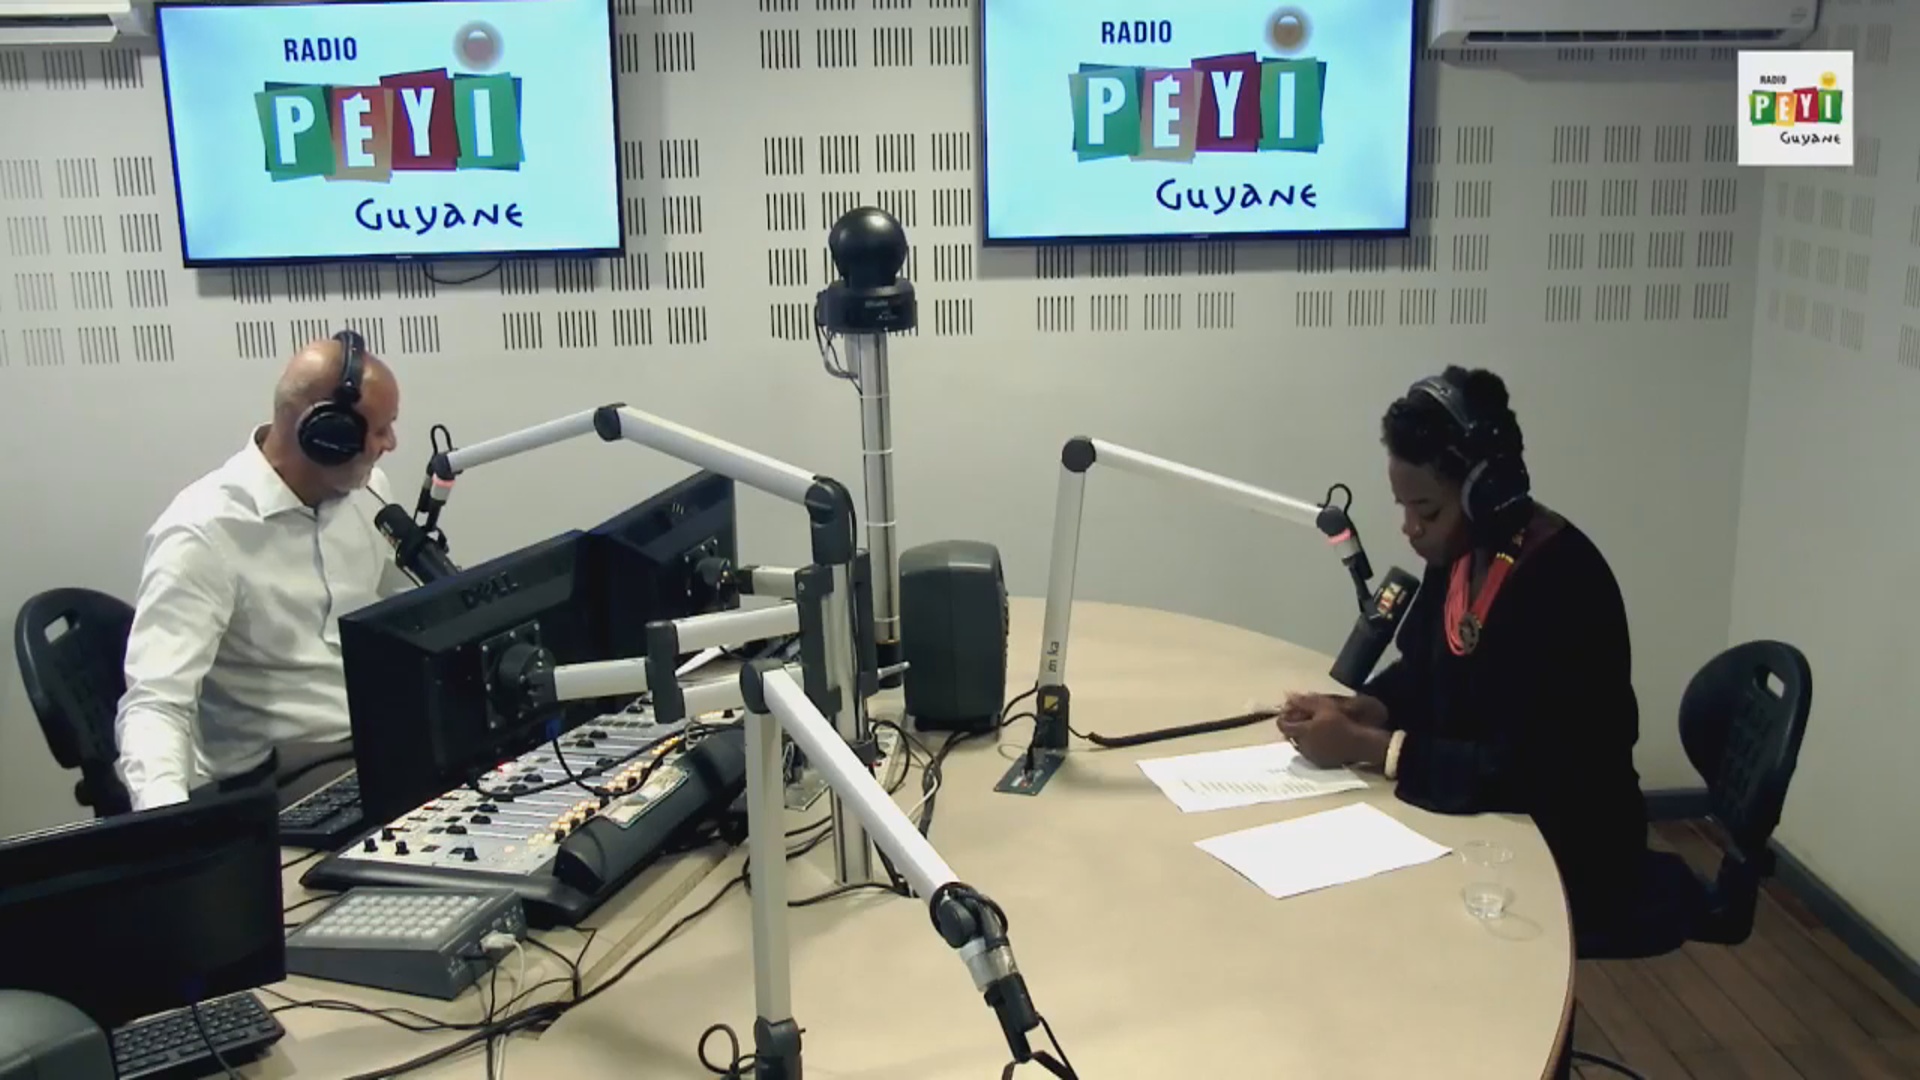 [Vidéo] Onews Guyane Les infos de radio Péyi